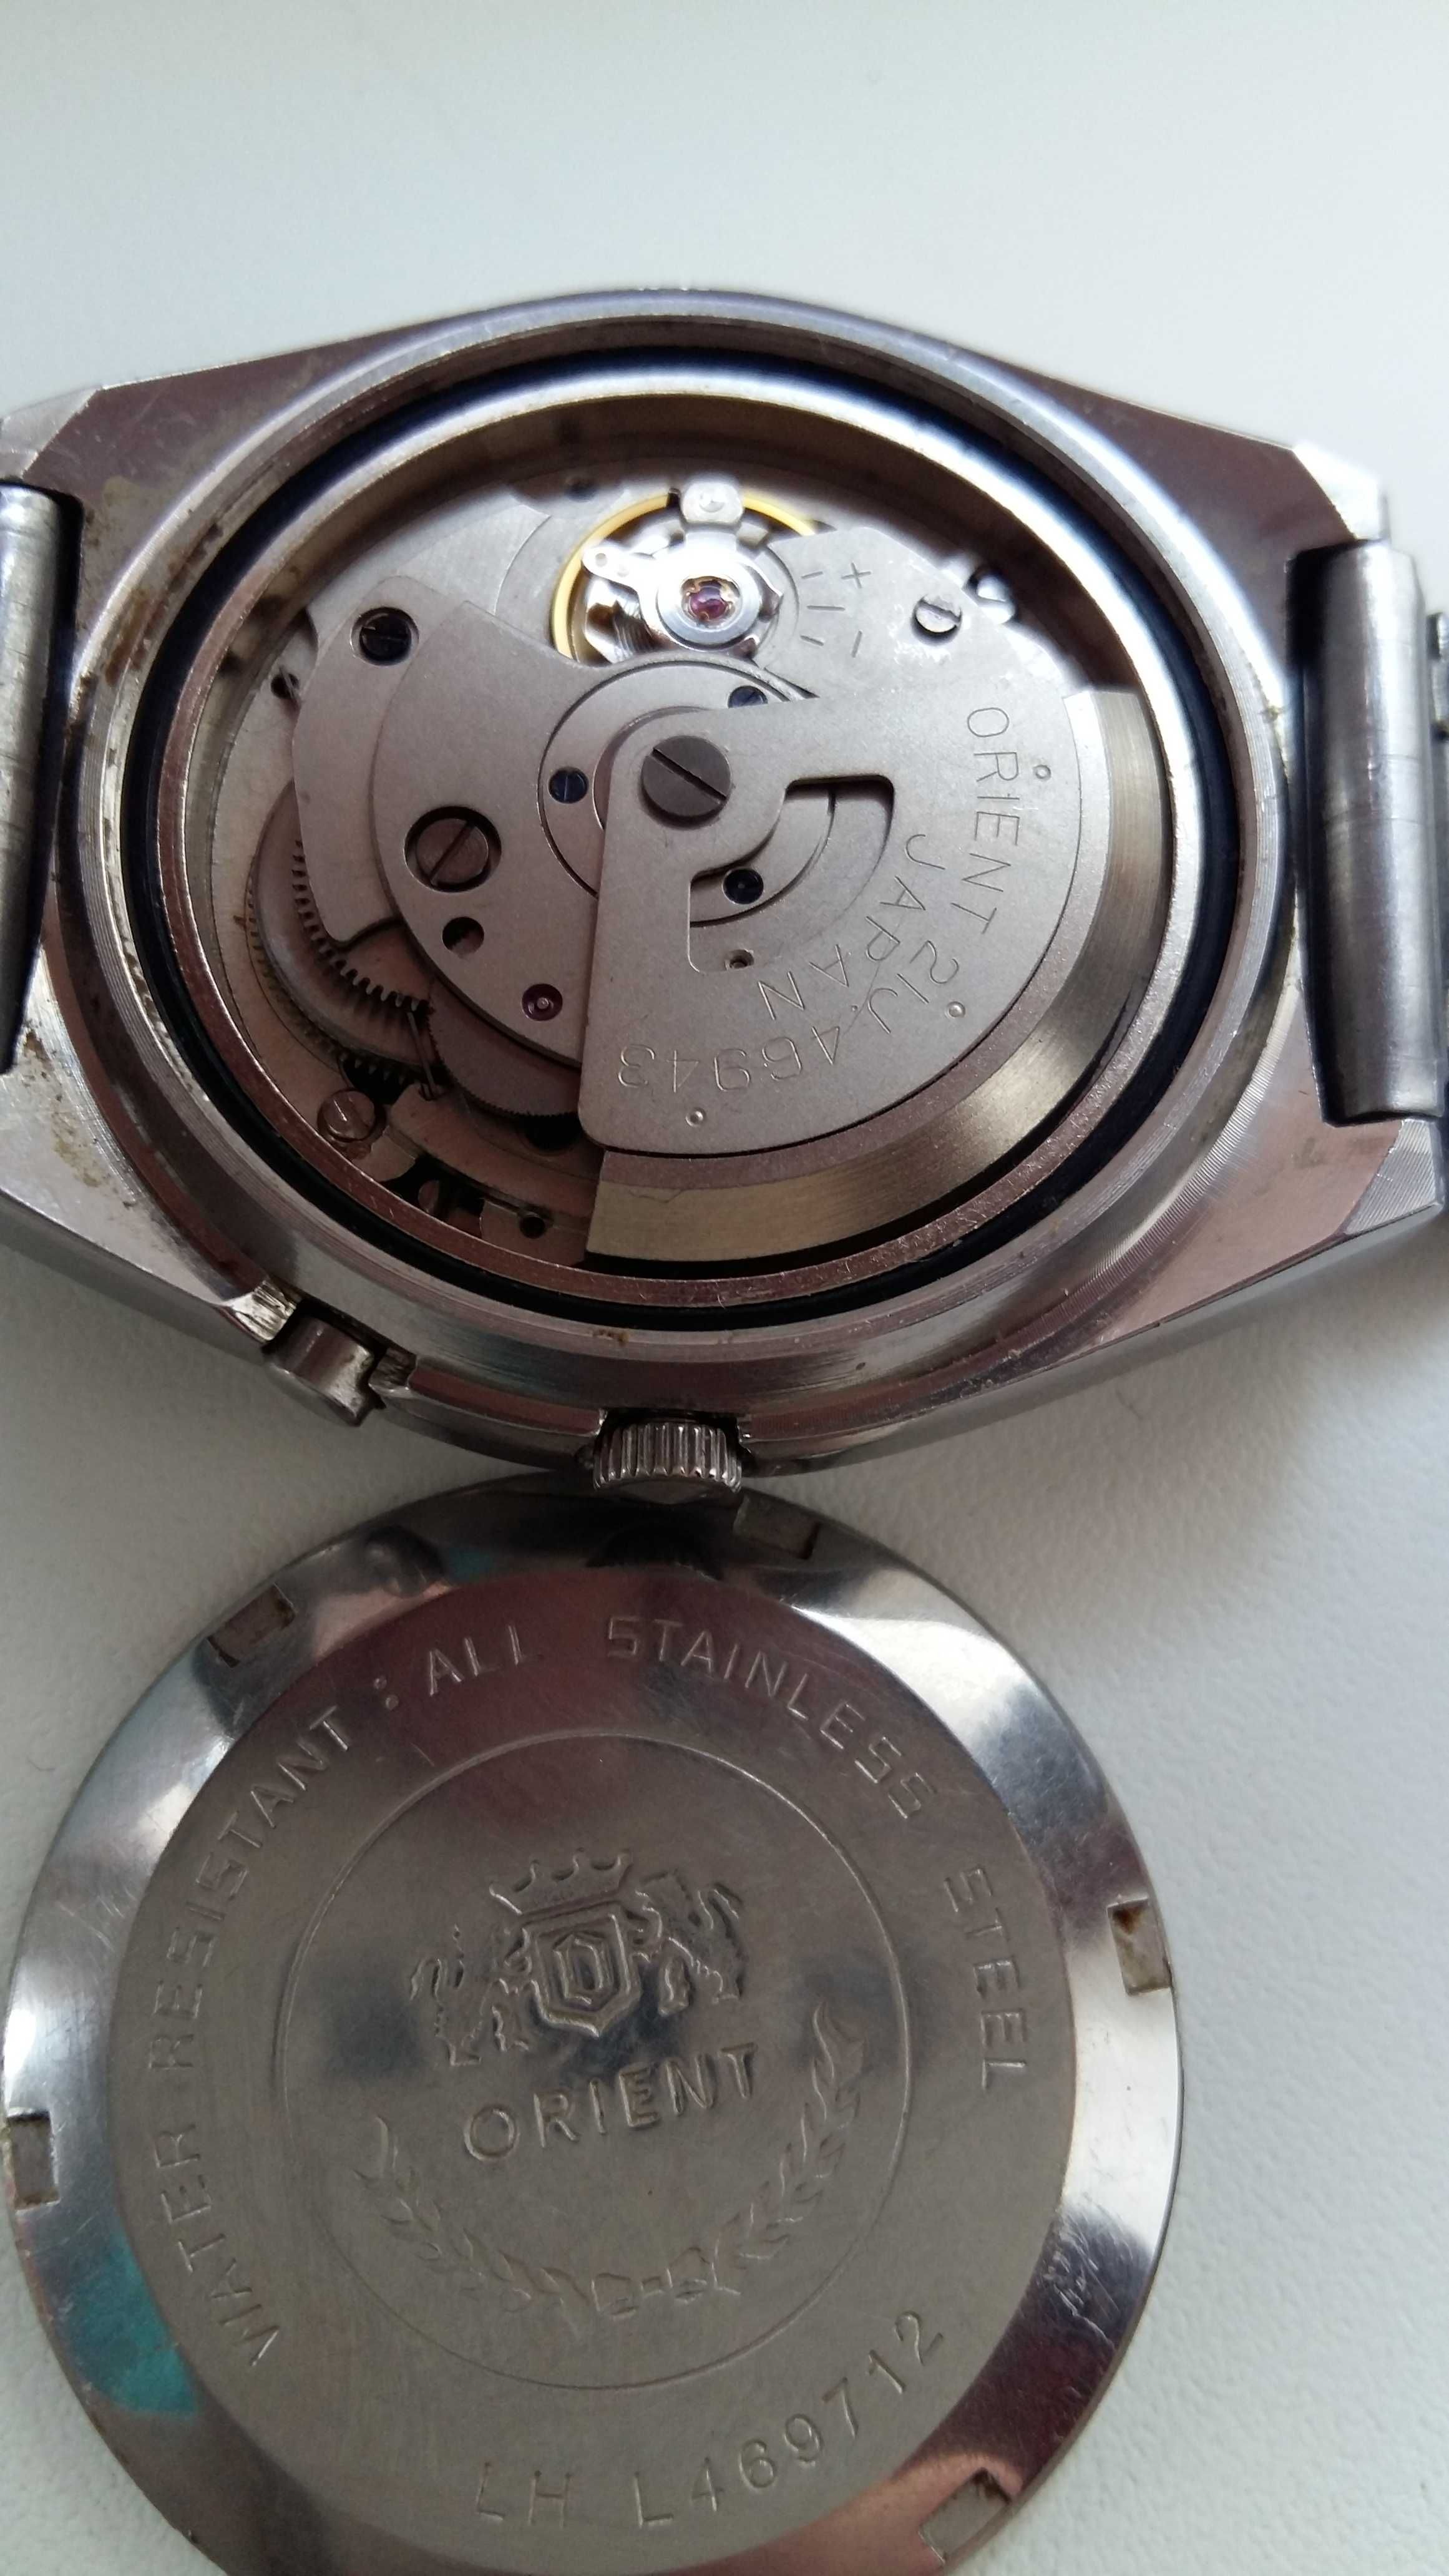 Zegarek Orient 21 jewels automatic stal nie srebro.